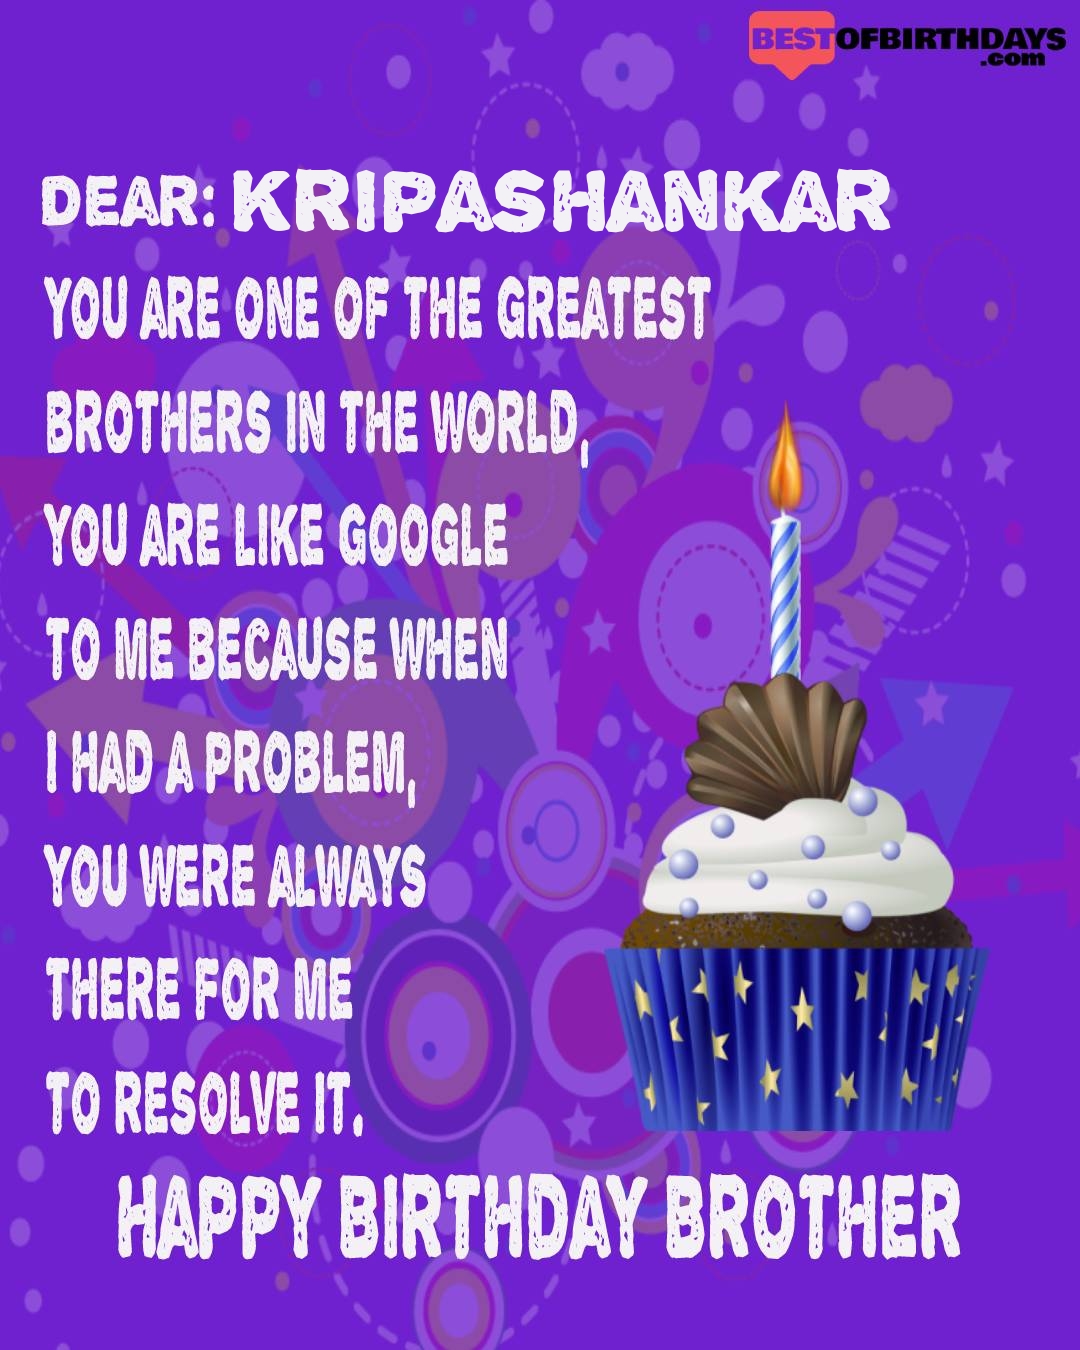 Happy birthday kripashankar bhai brother bro